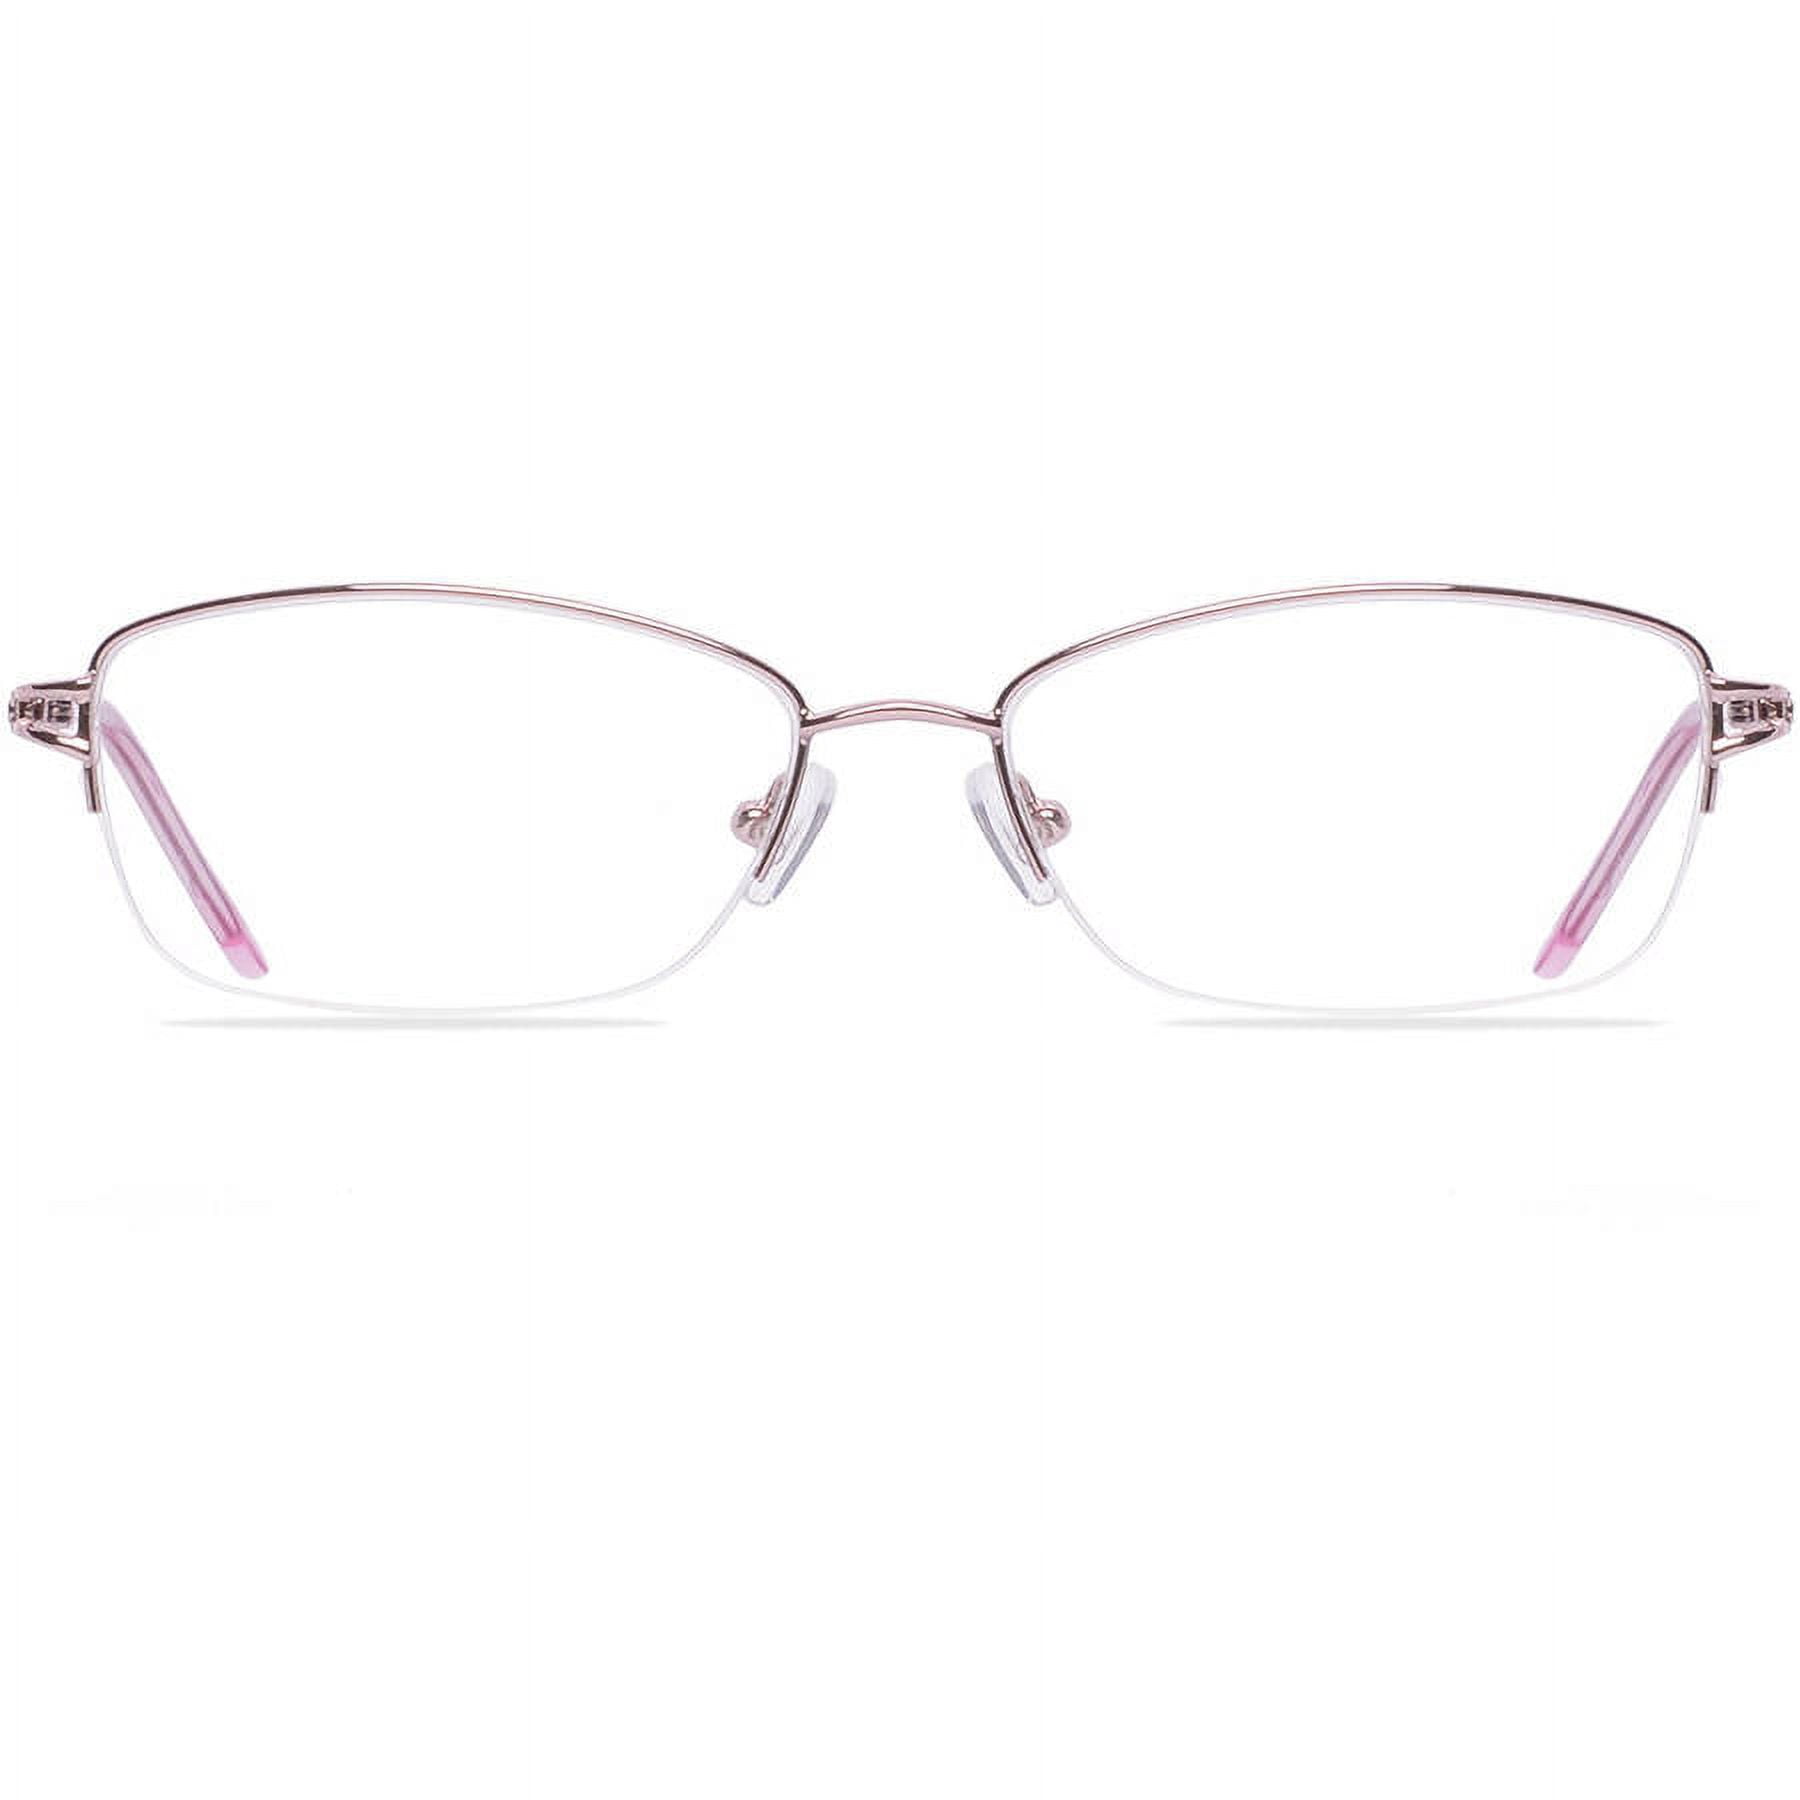 Christie Brinkley Womens Prescription Glasses, Gleeful Pink